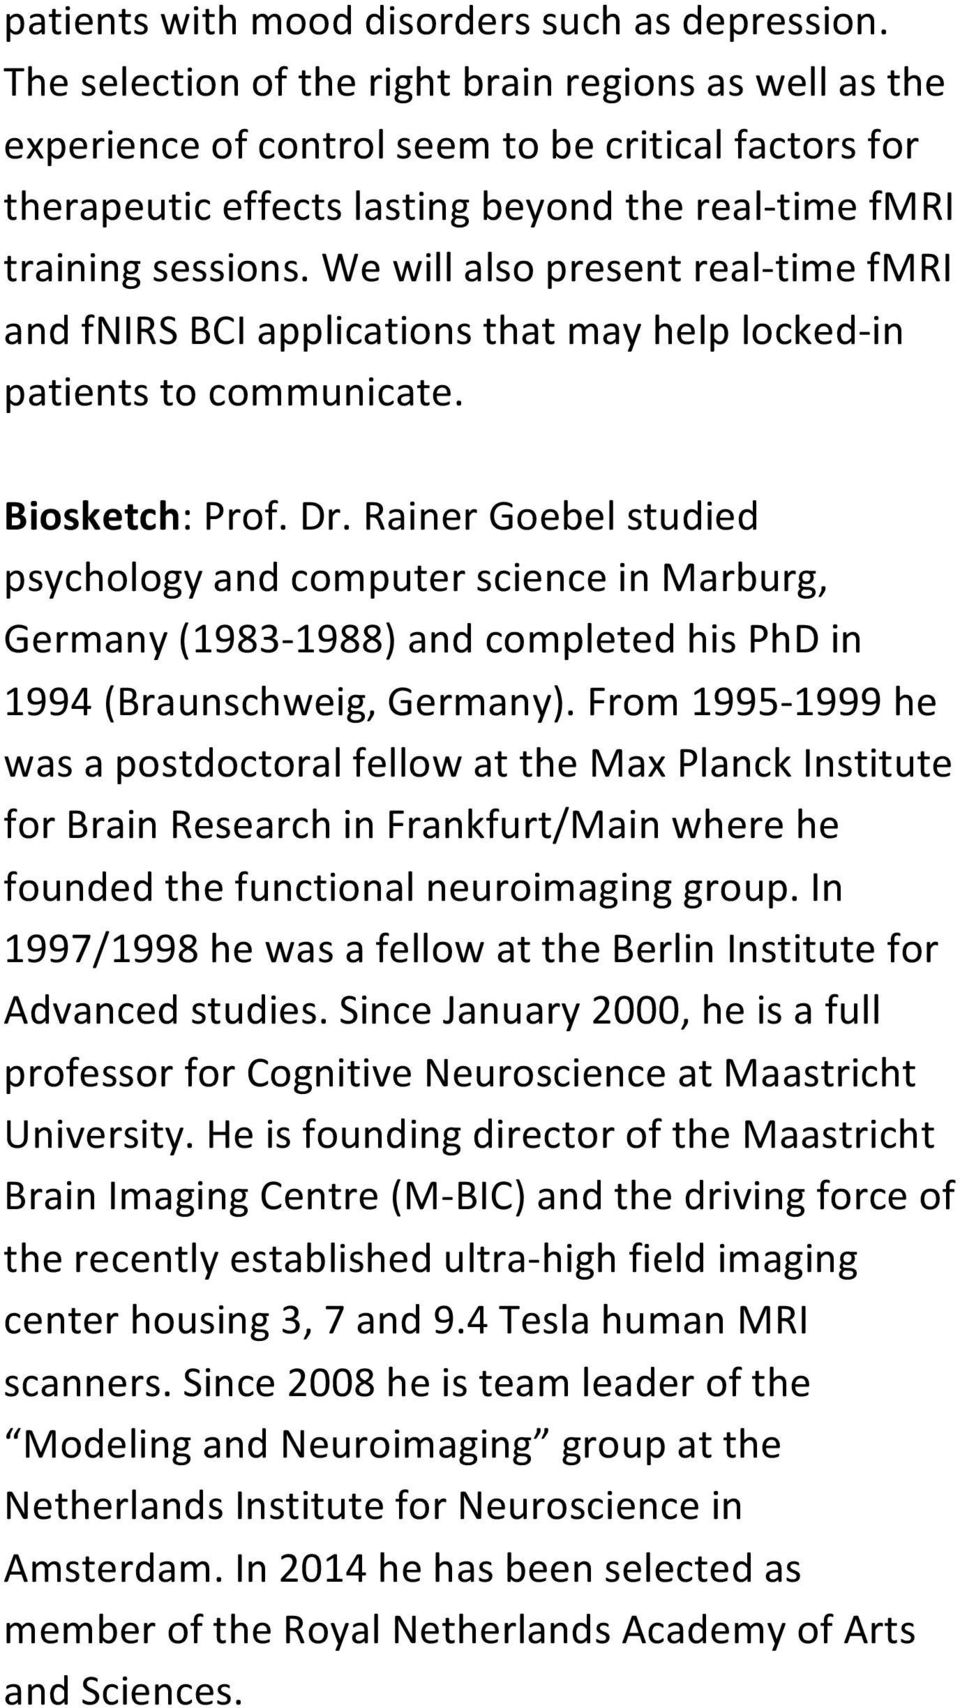 RainerGoebelstudied psychologyandcomputerscienceinmarburg, Germany(1983E1988)andcompletedhisPhDin 1994(Braunschweig,Germany).